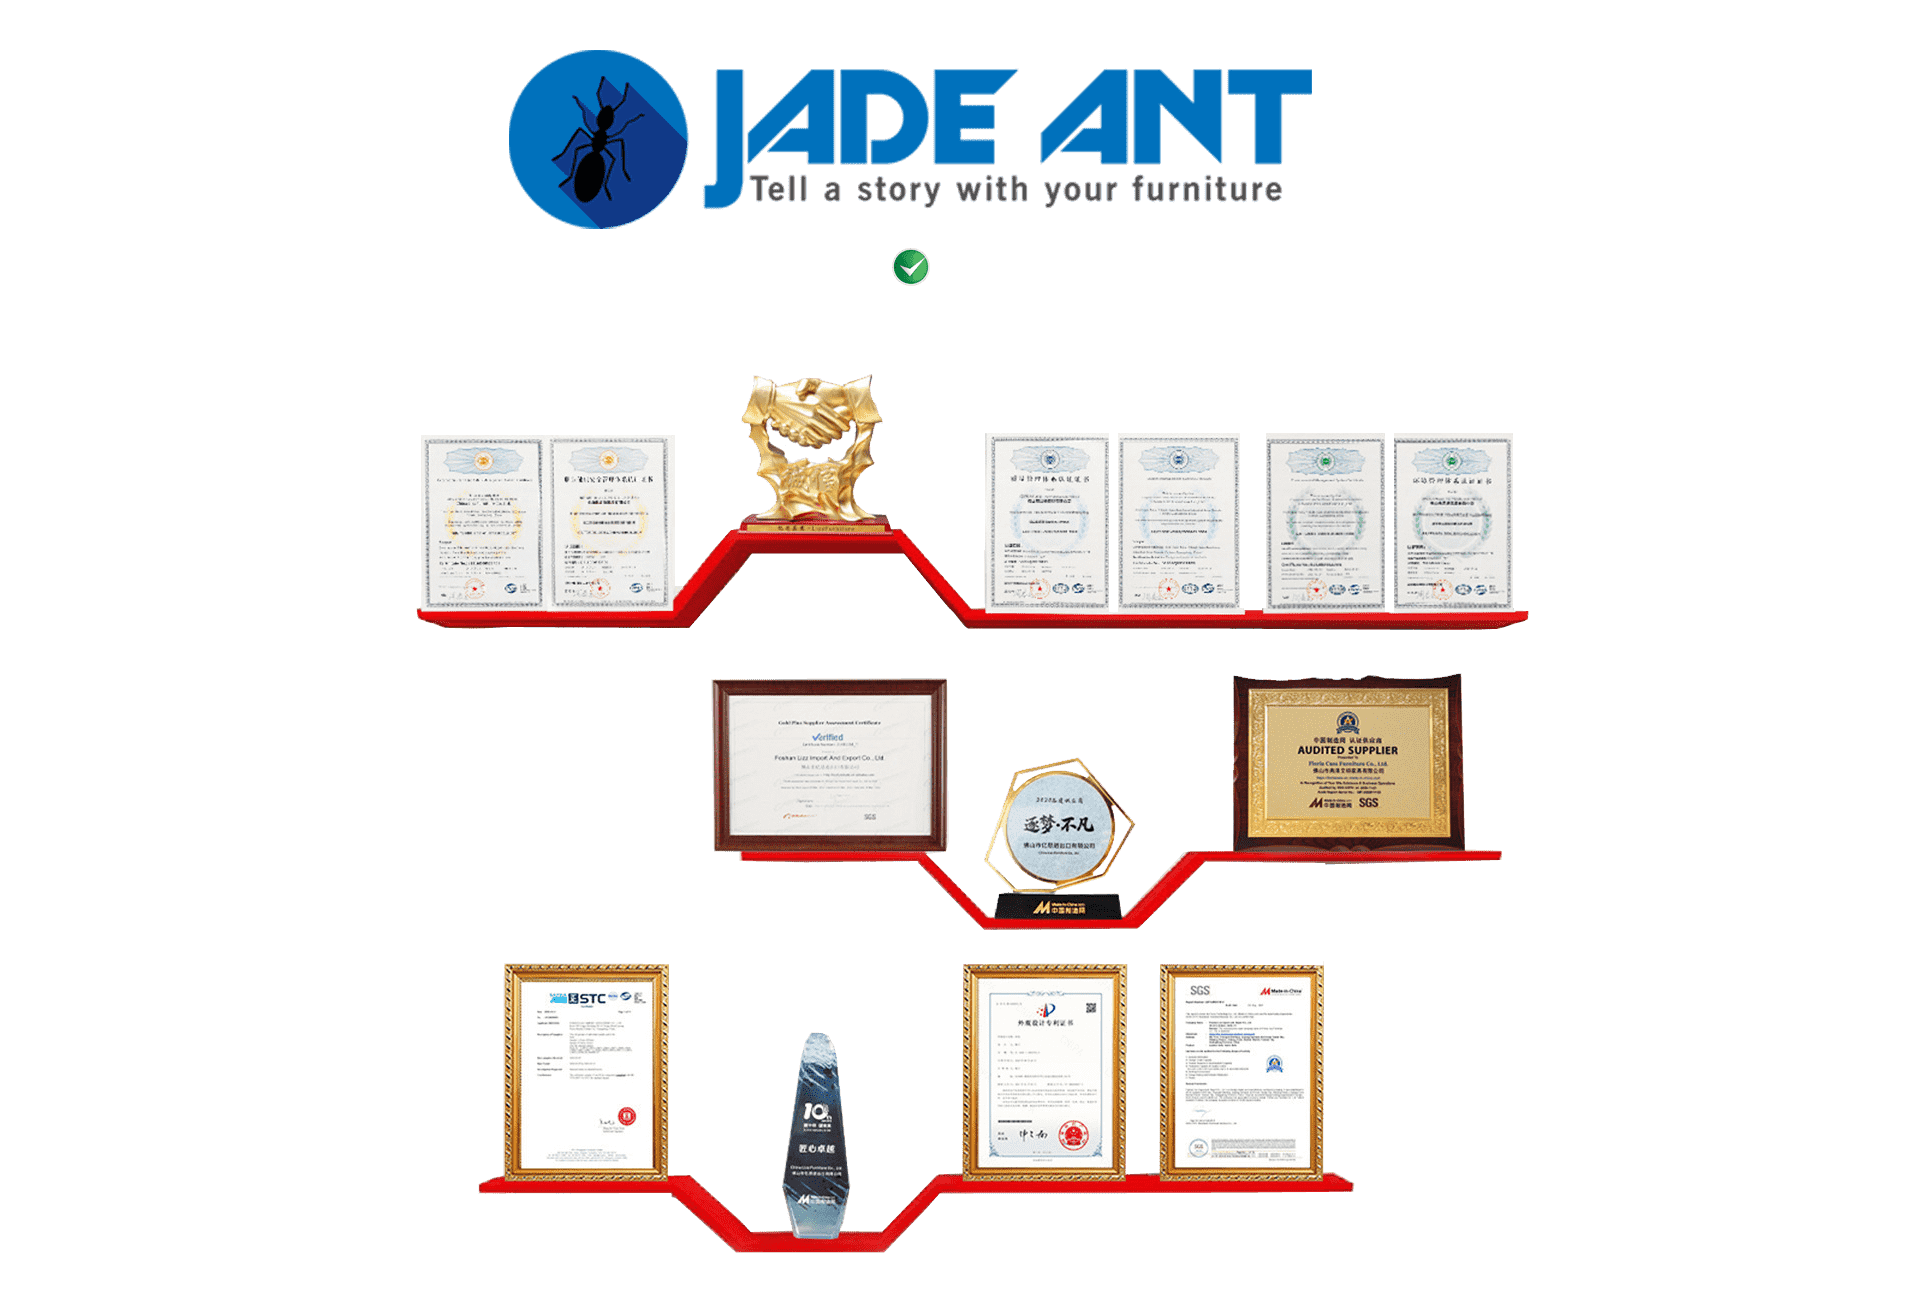 jade-ant-certifications